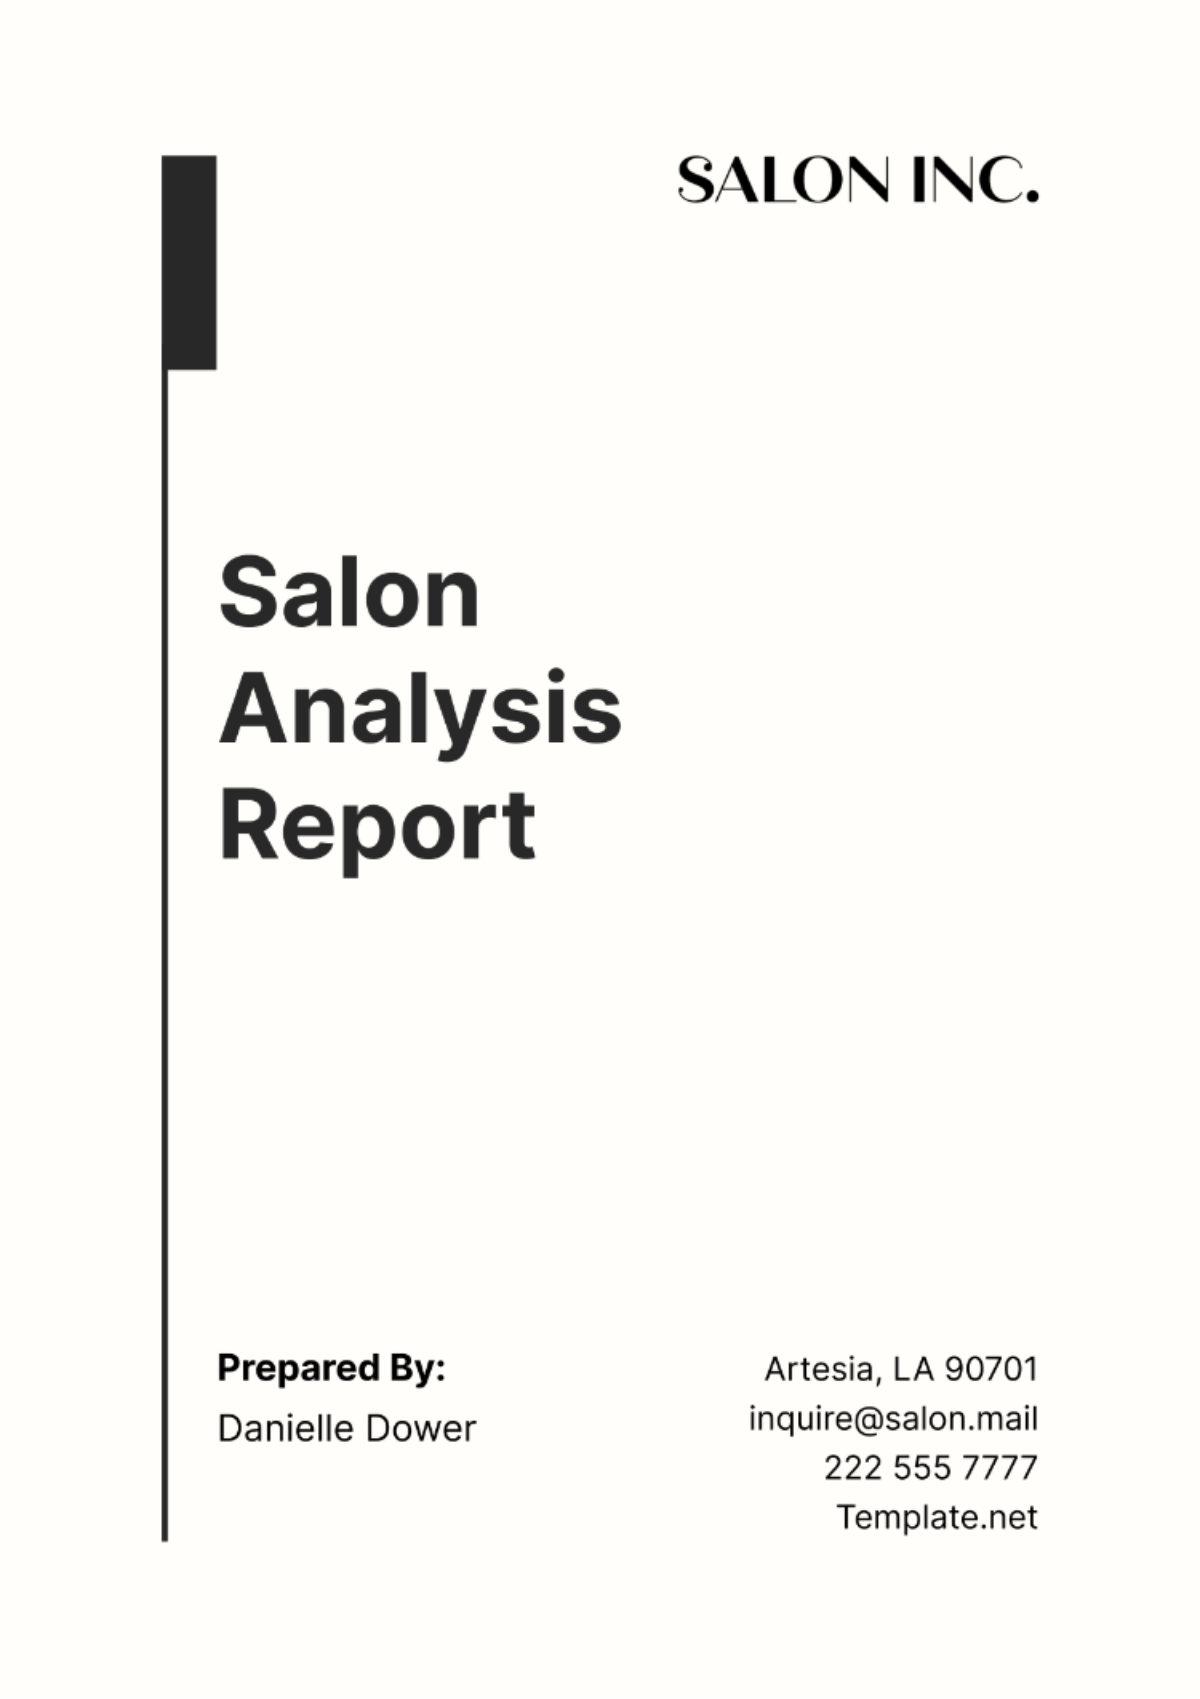 Salon Analysis Report Template